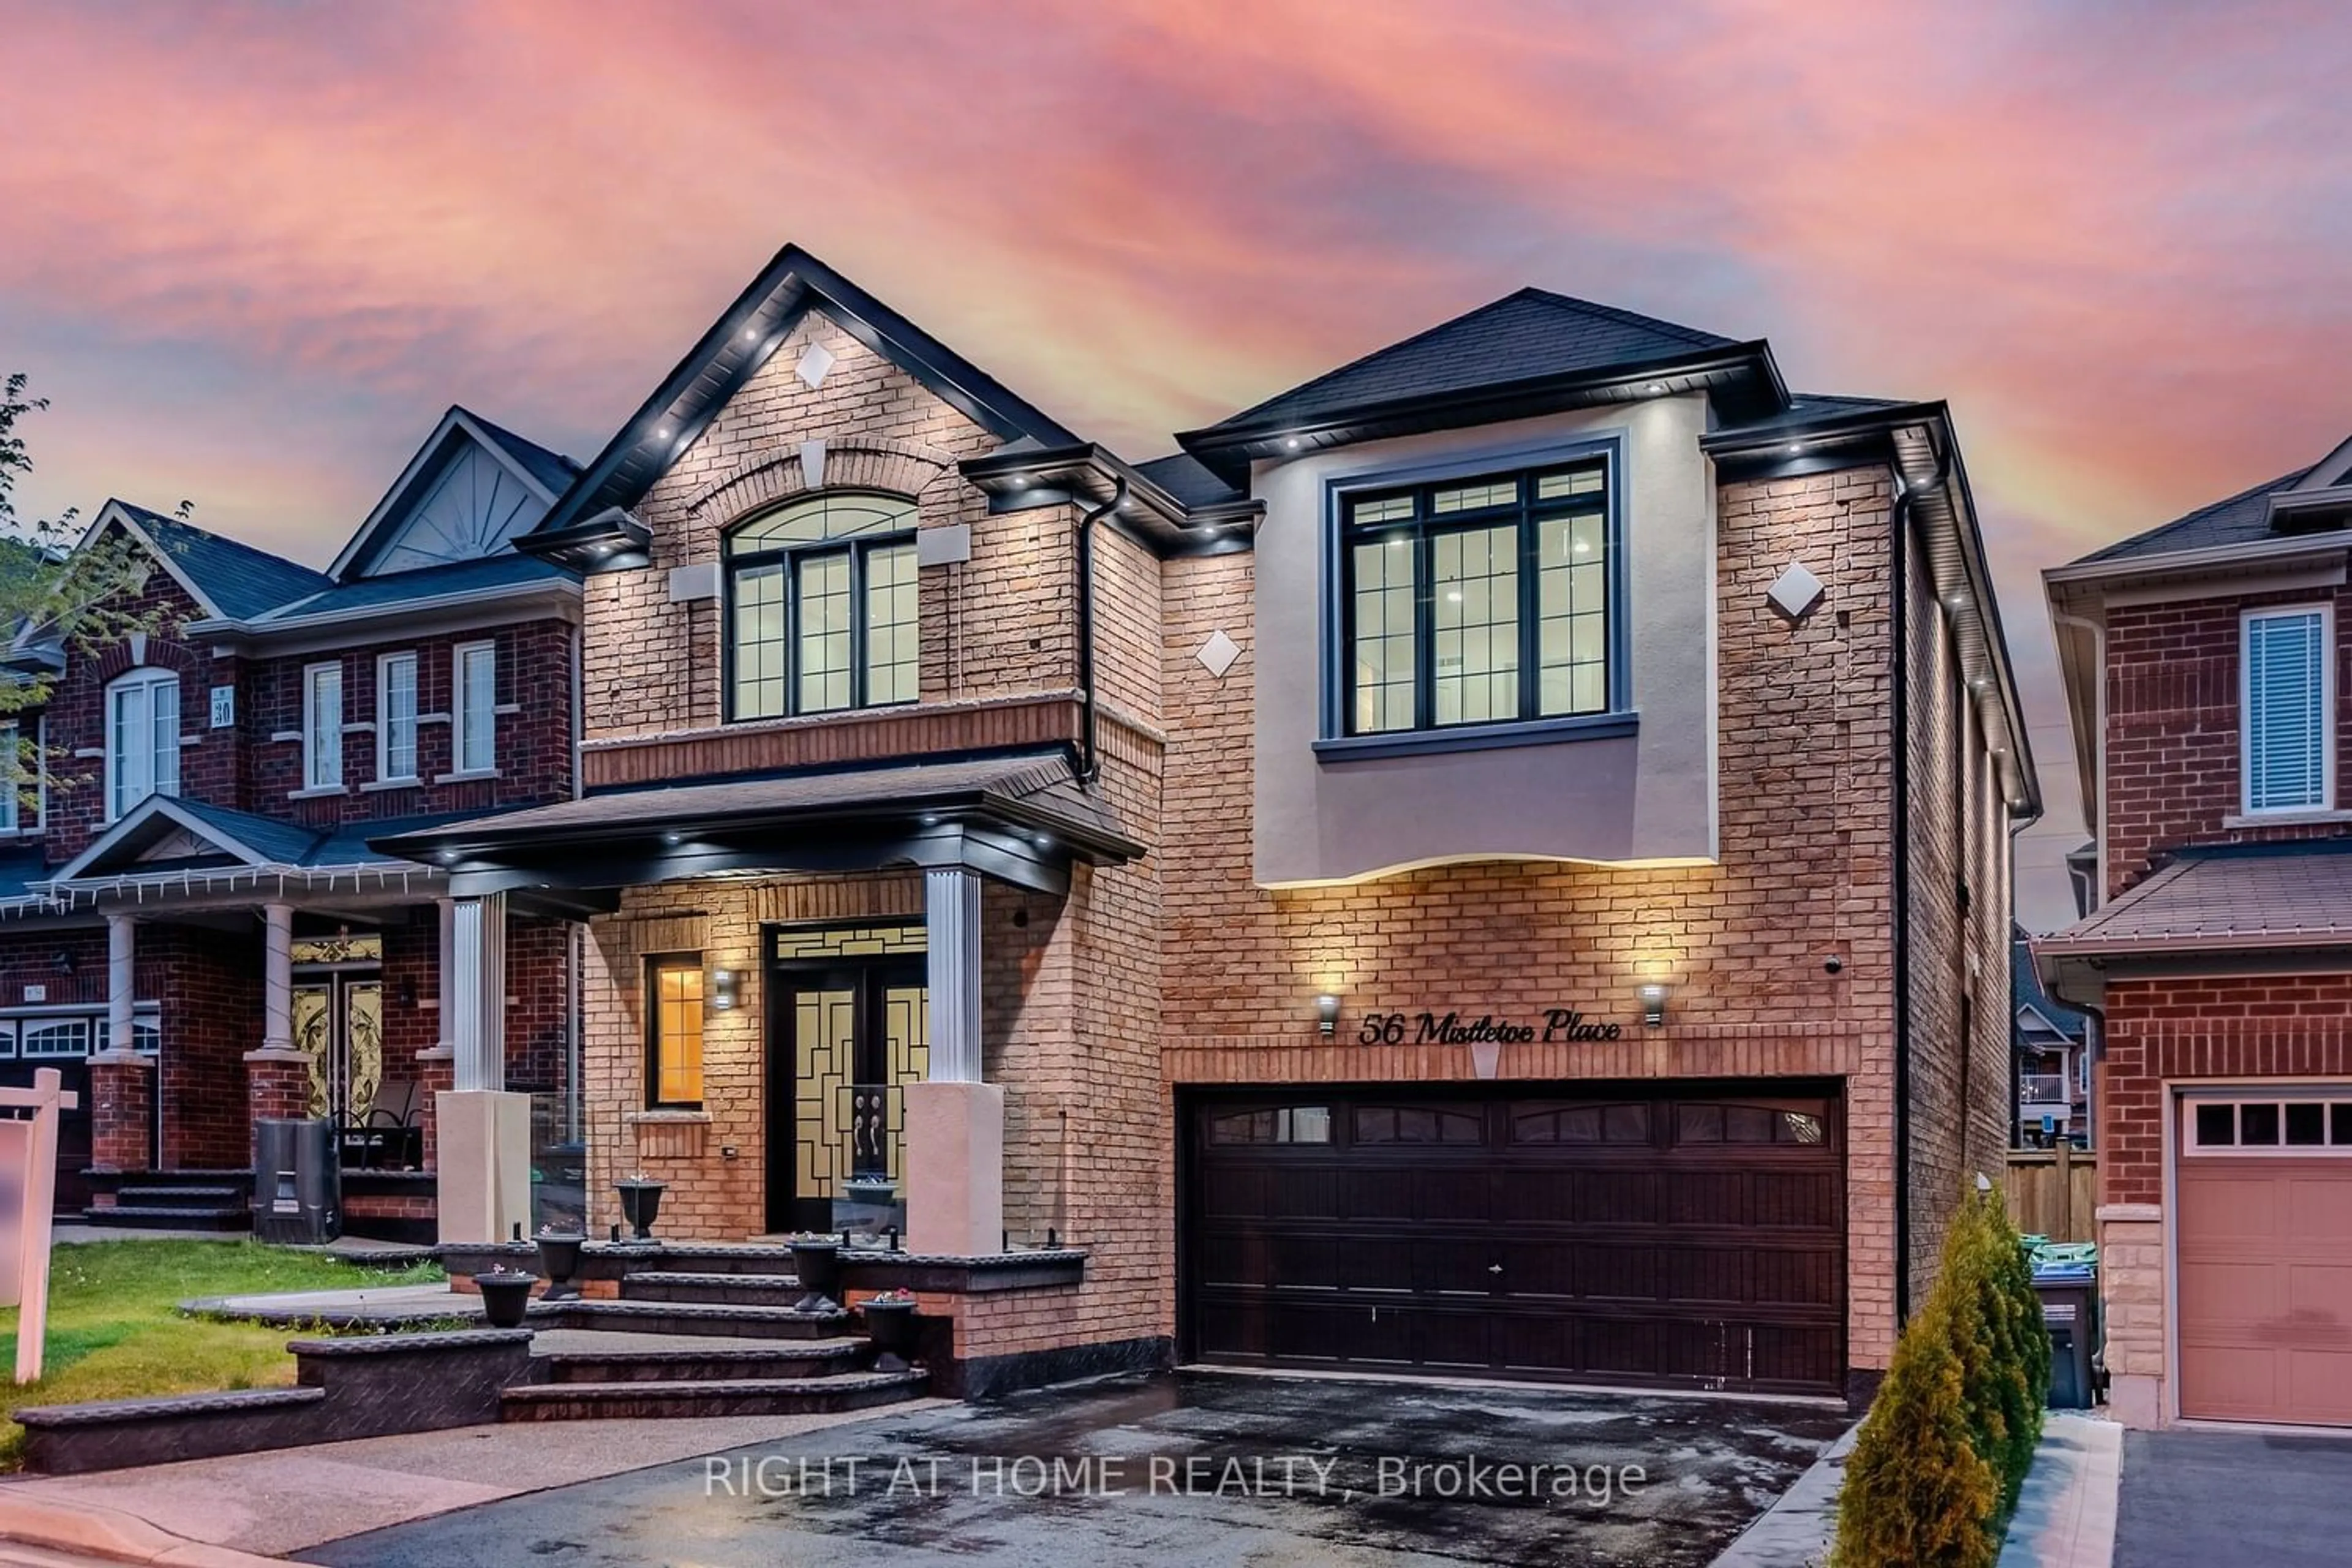 Home with brick exterior material for 56 Mistletoe Pl, Brampton Ontario L6Y 5V2